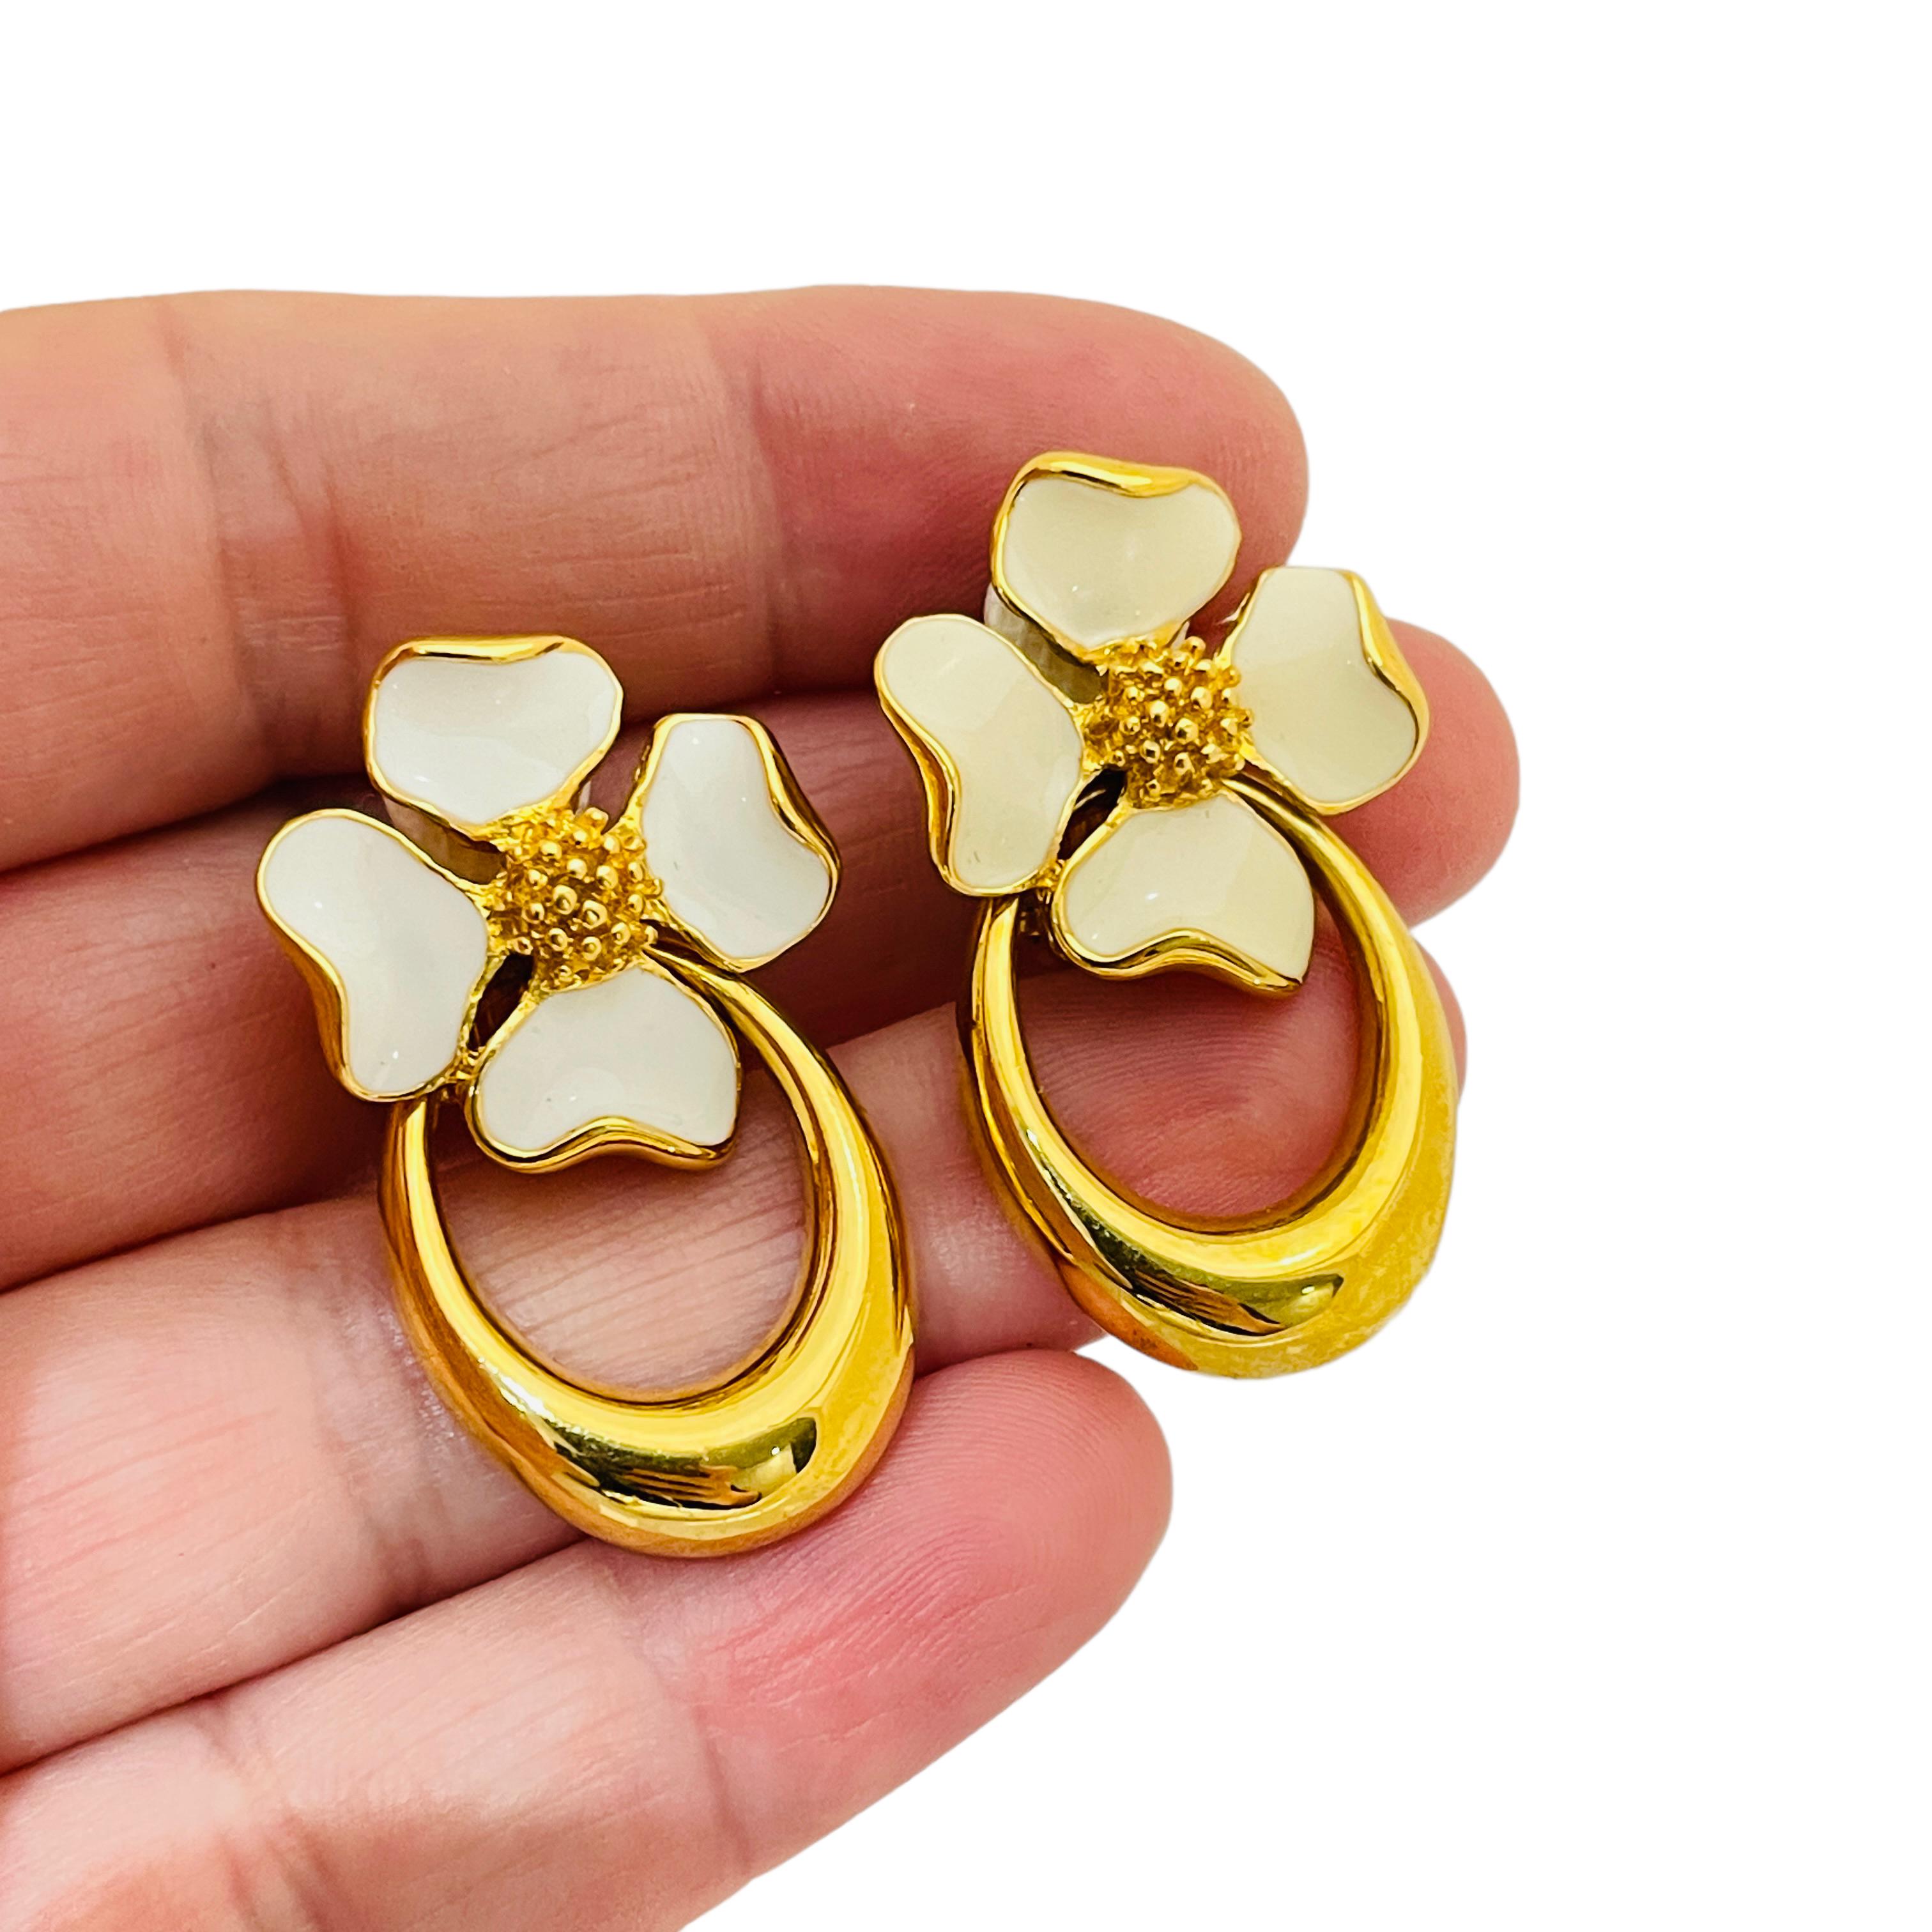 DETAILS

• unsigned 

• gold tone with enamel

• vintage designer clip on earrings

MEASUREMENTS

• 1.38